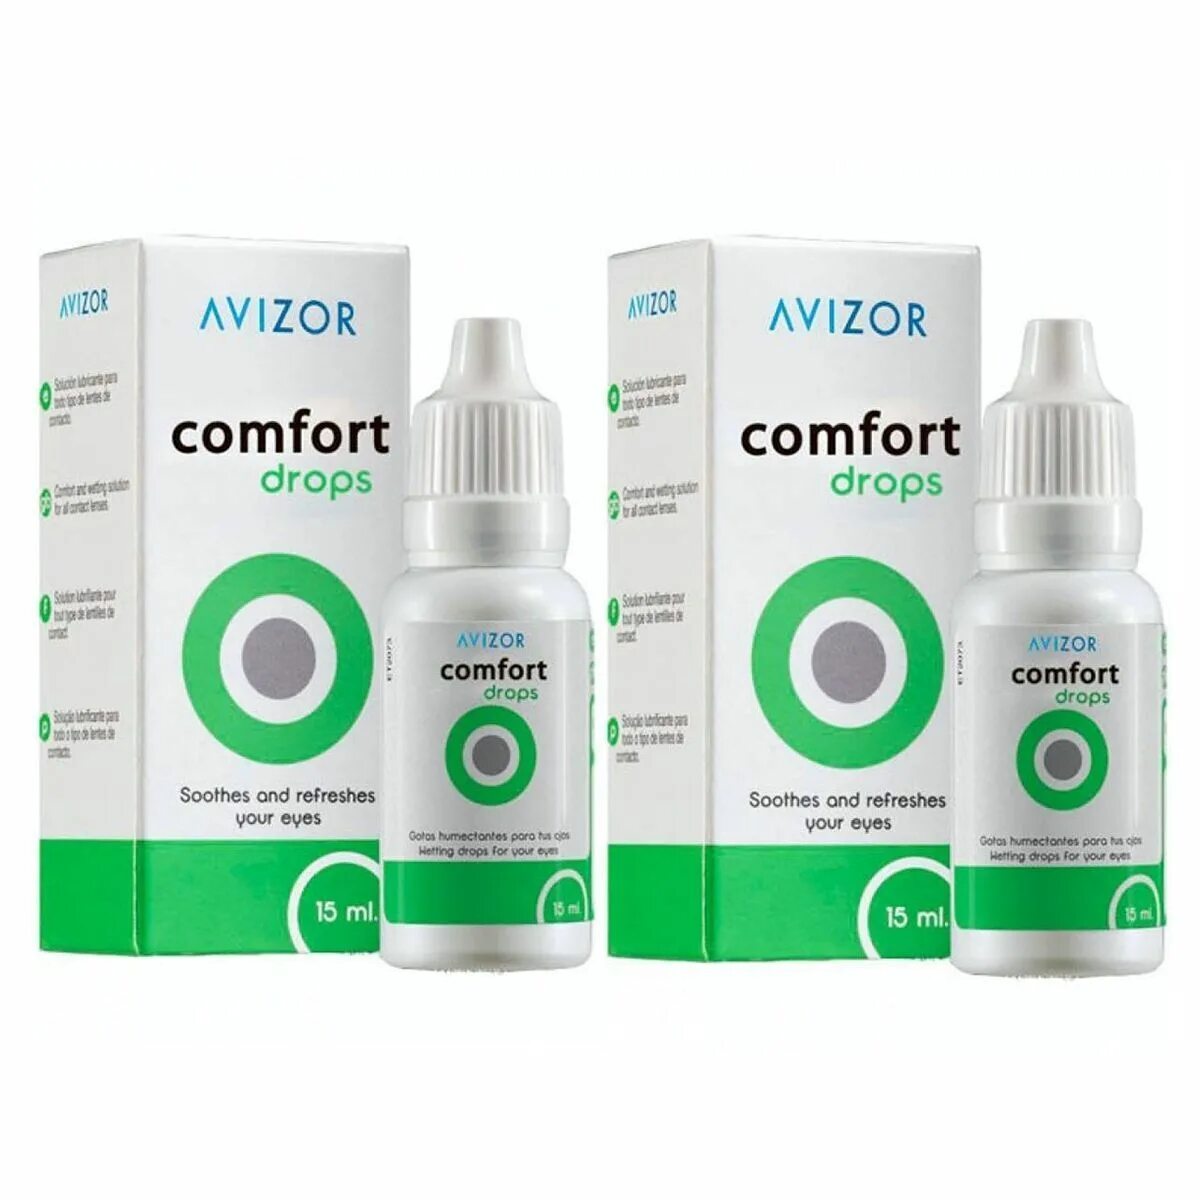 Увлажняющие капли Avizor Comfort Drops. Avizor Comfort Drops 15 мл. Авизор комфорт Дропс капли глазные, 15 мл Авизор. Капли Avizor Comfort Drops, 15 мл.